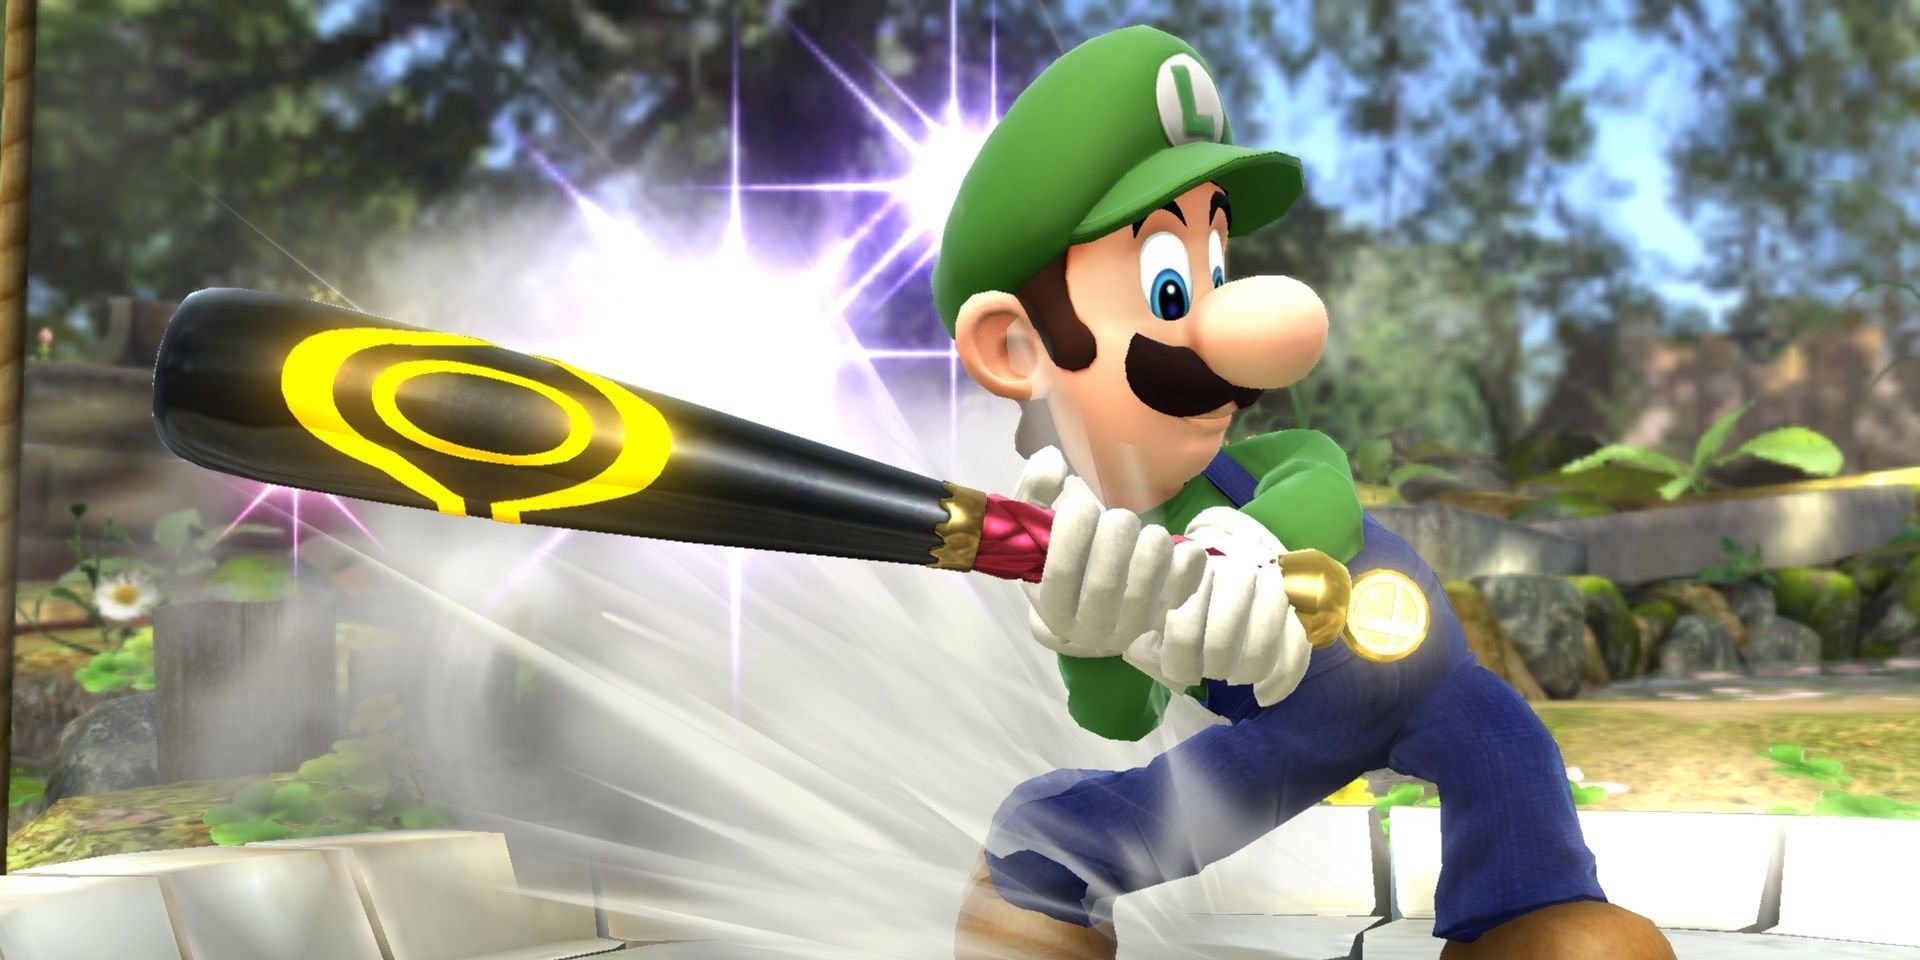 Luigi holding a baseball bat